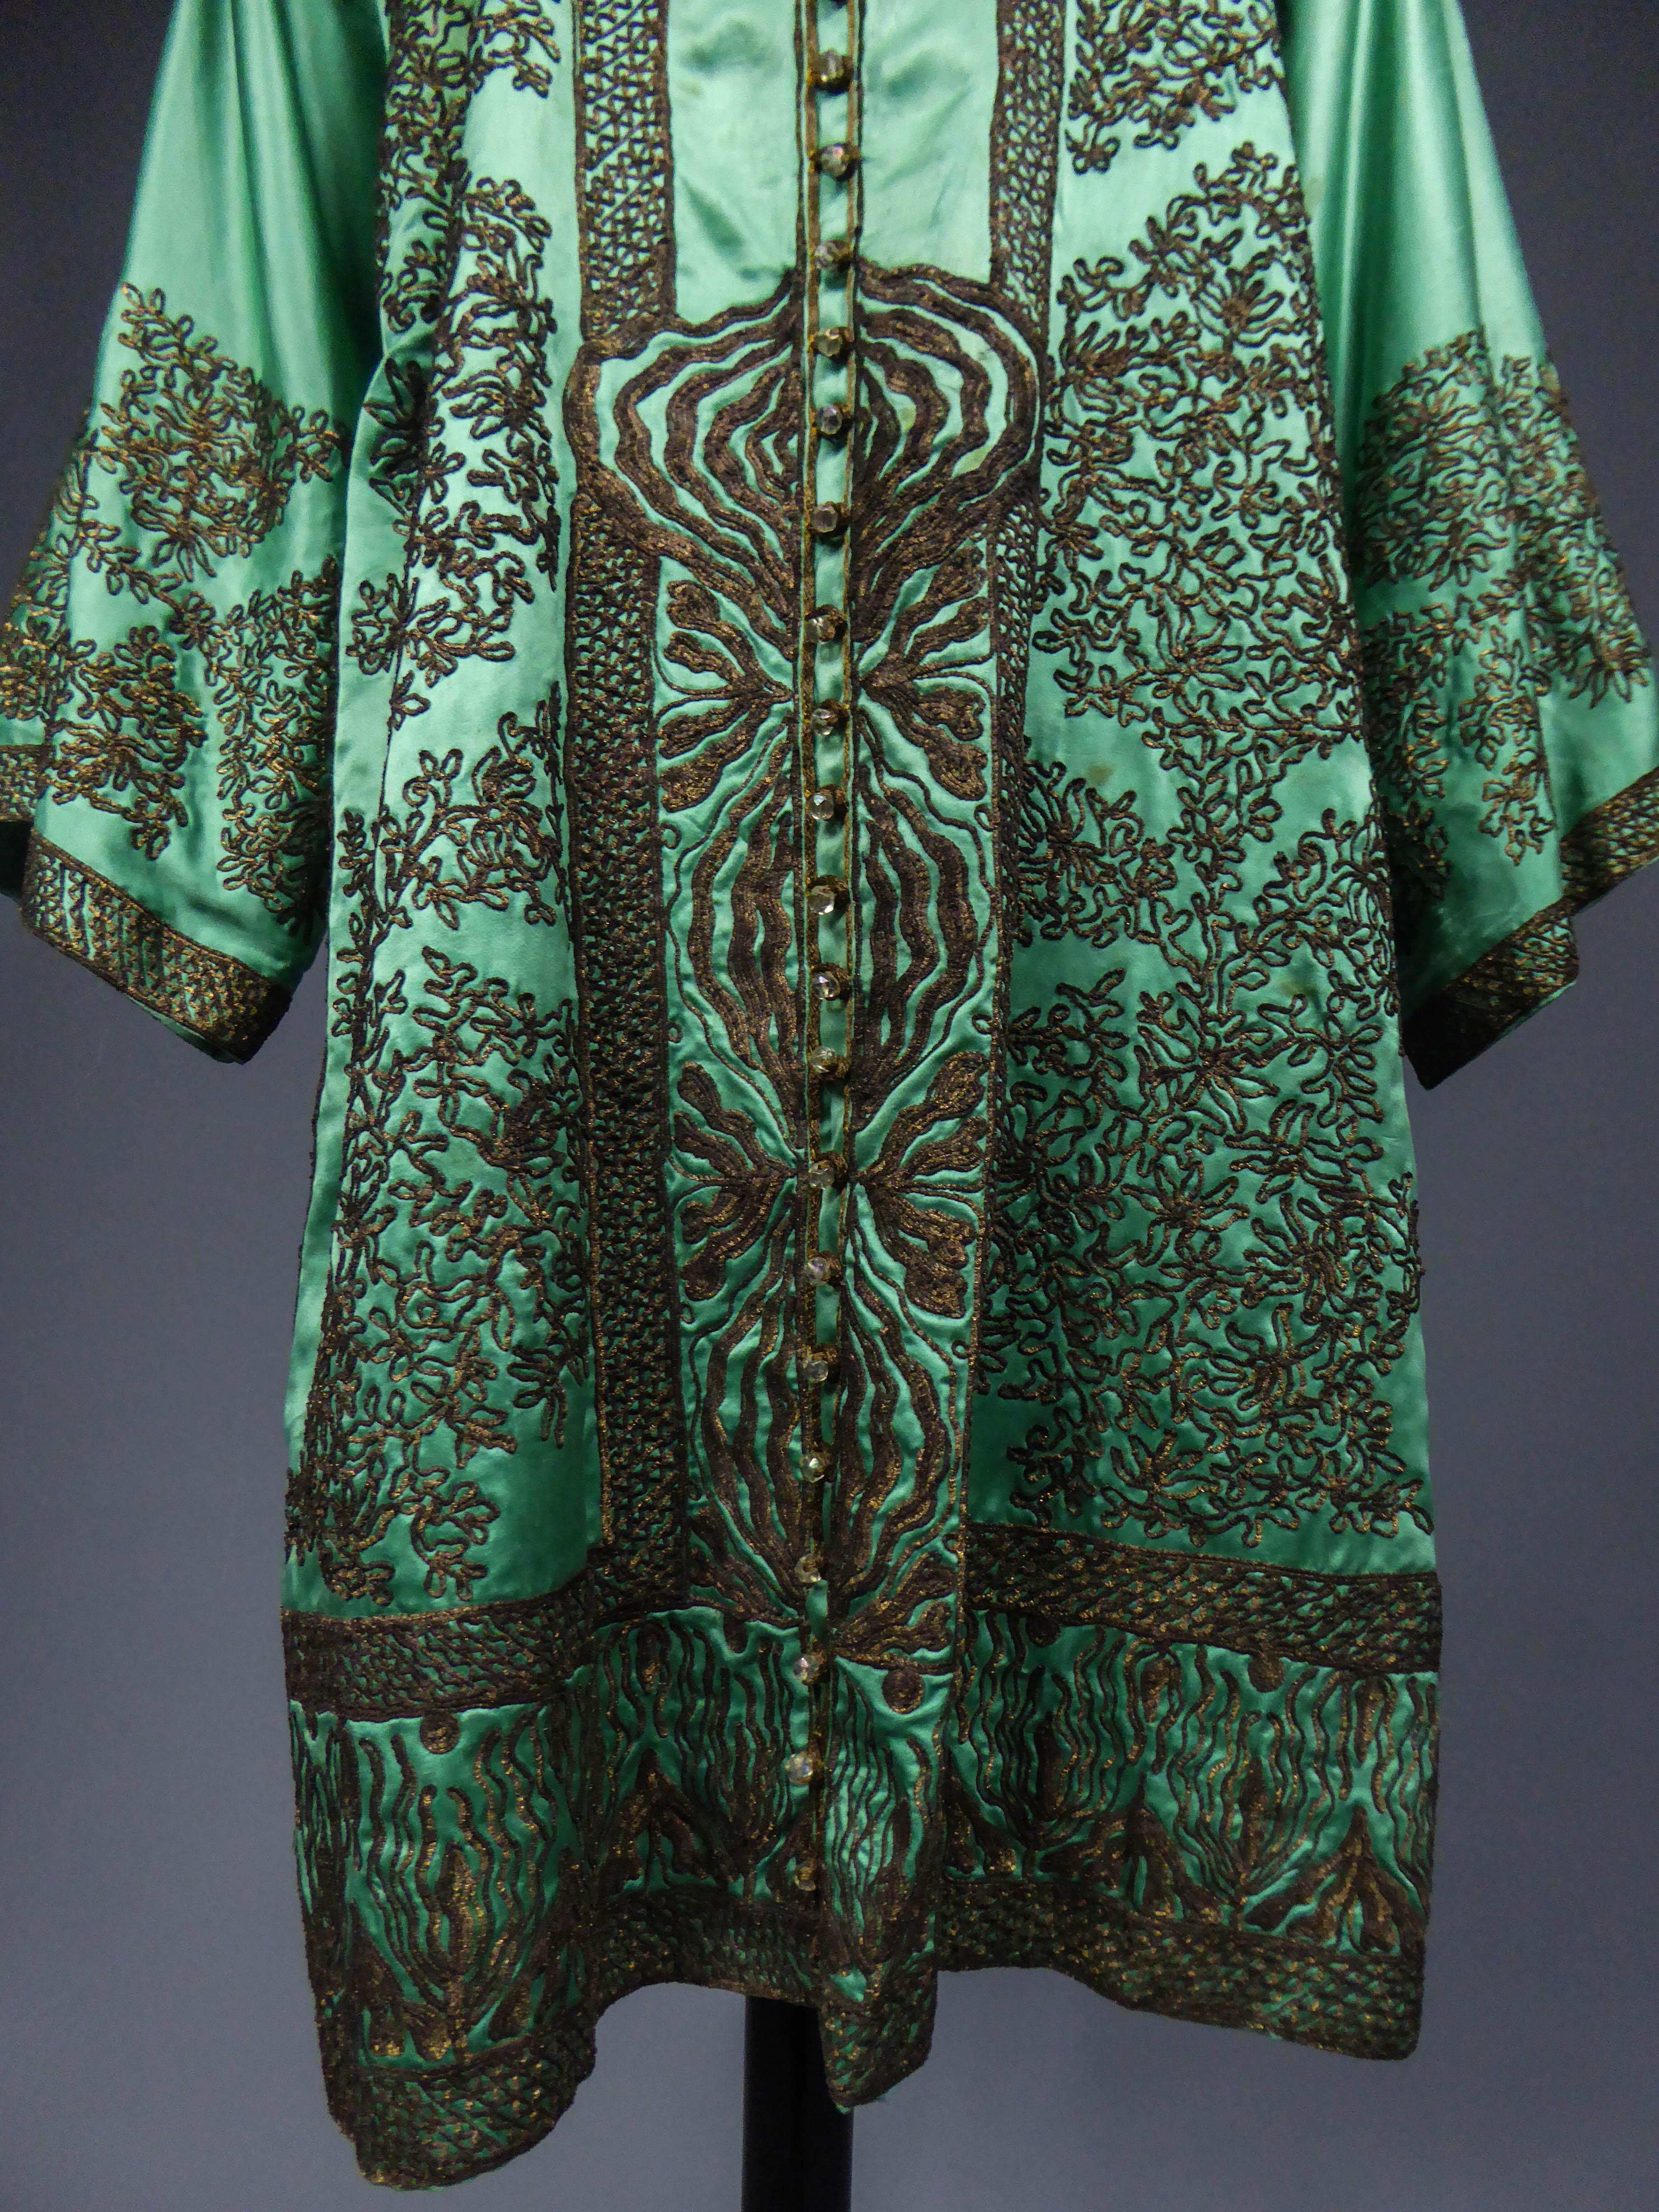 Black Babani Couture Kaftan or Party Kimono in green satin with appliqué, circa 1915